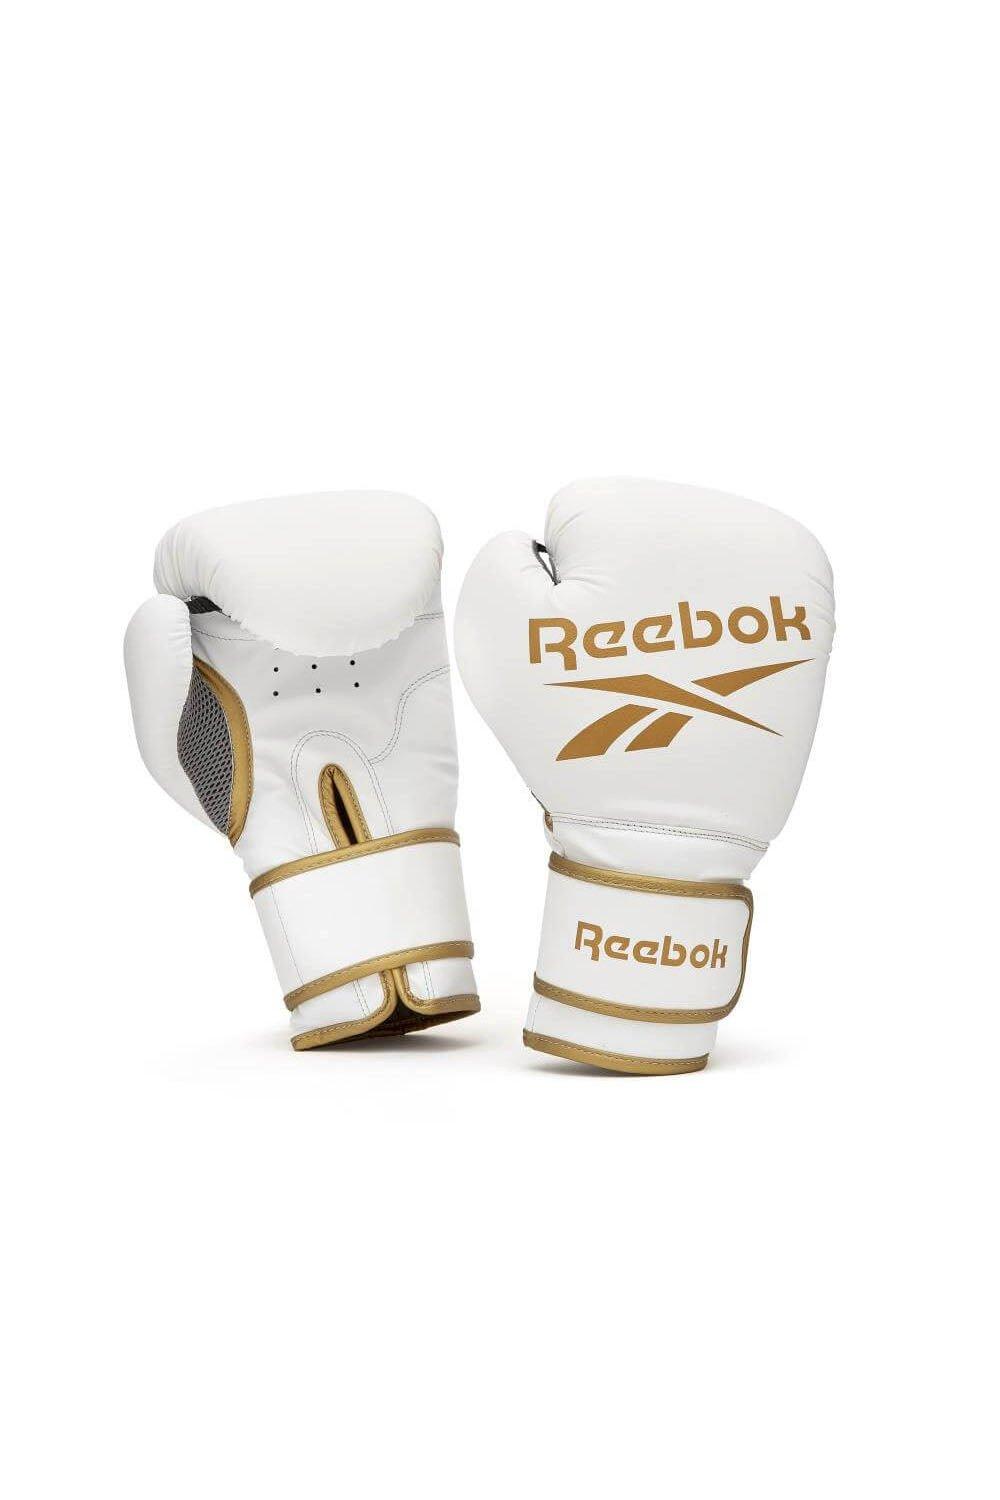 Reebok Boxing Gloves - Gold/White|Size: 10oz|white